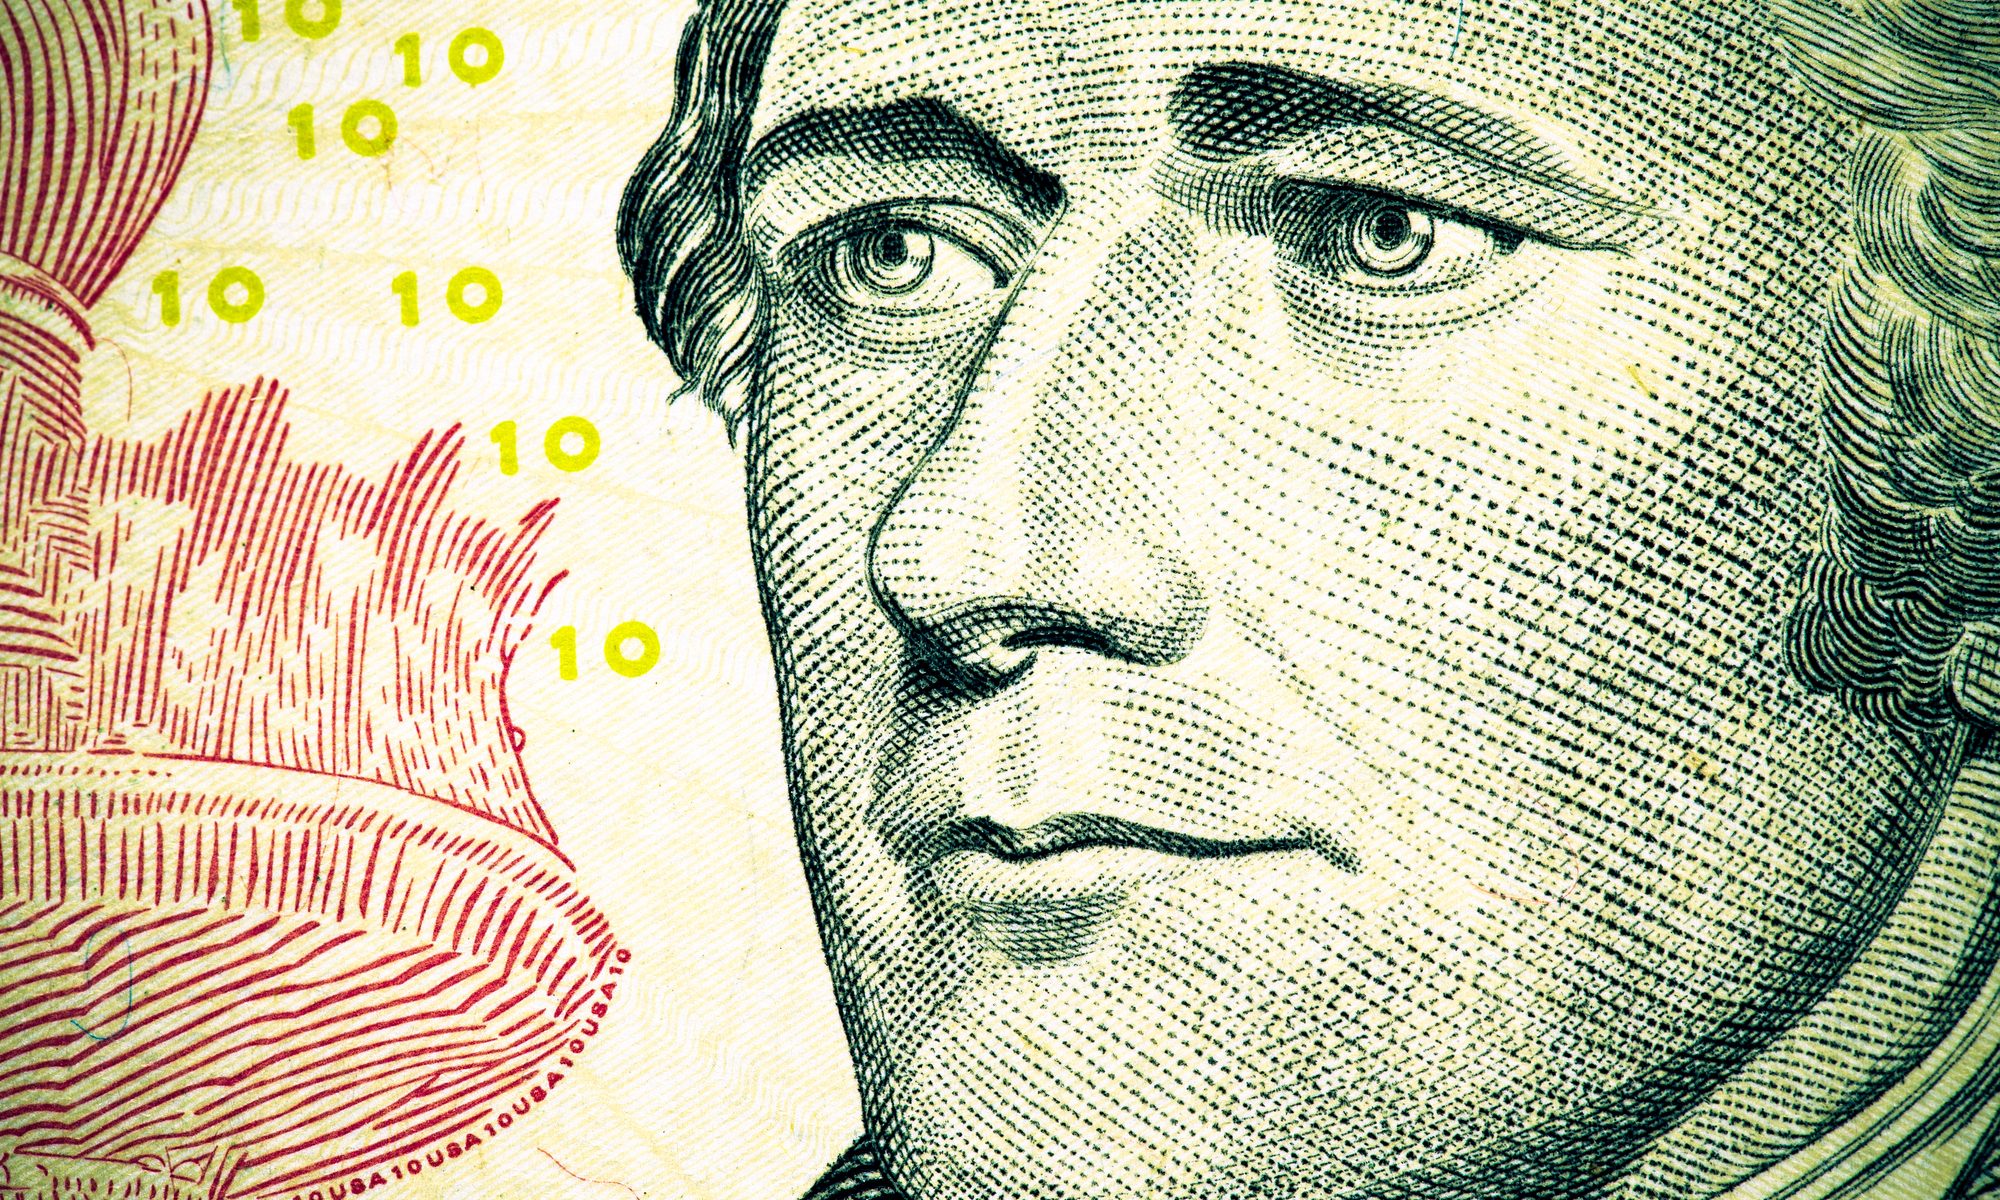 image of Alexander Hamilton aside crown on ten dollar bill